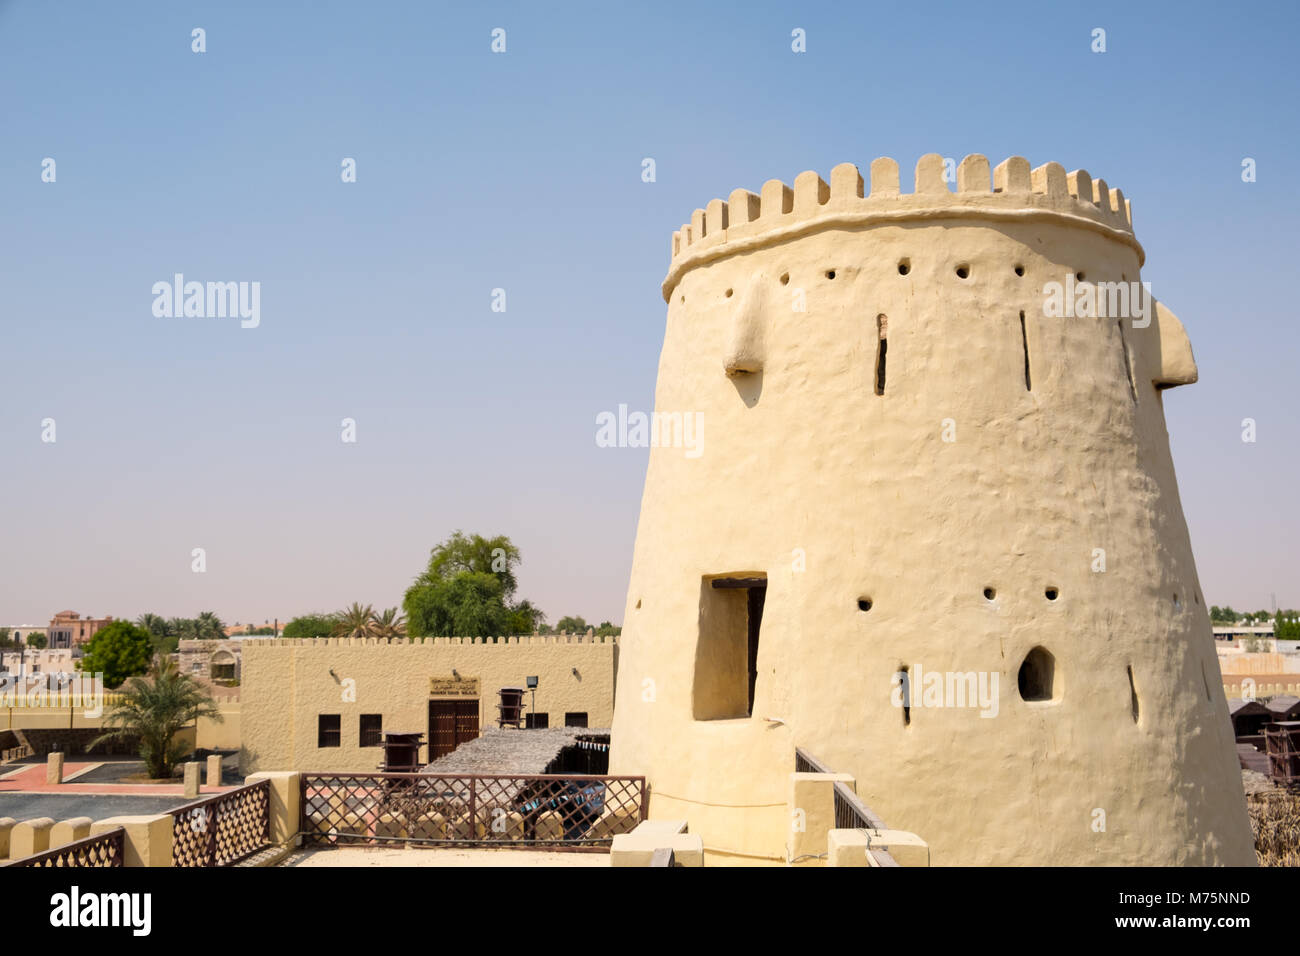 FALAJ AL MUALLA Fort and Museum, Umm al Quwain, United Arab Emirates Stock Photo